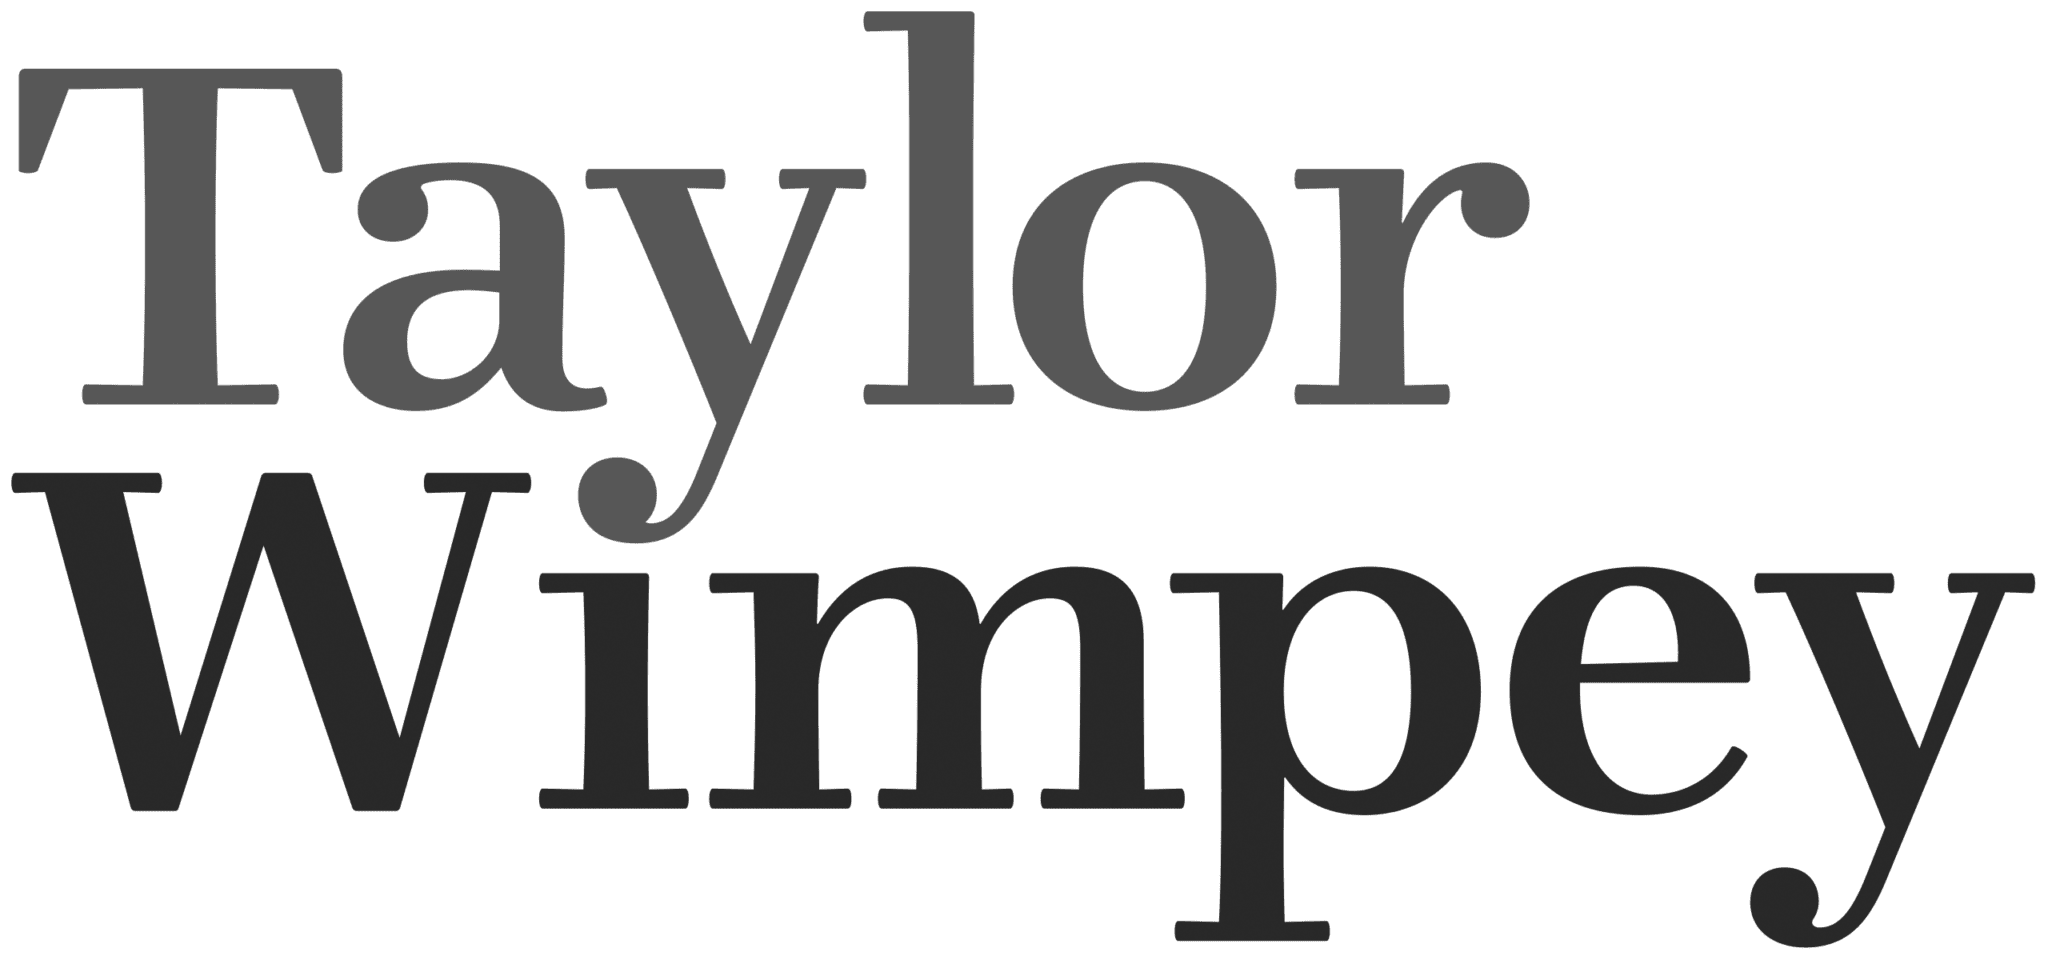 Taylor_Wimpey_logo BW